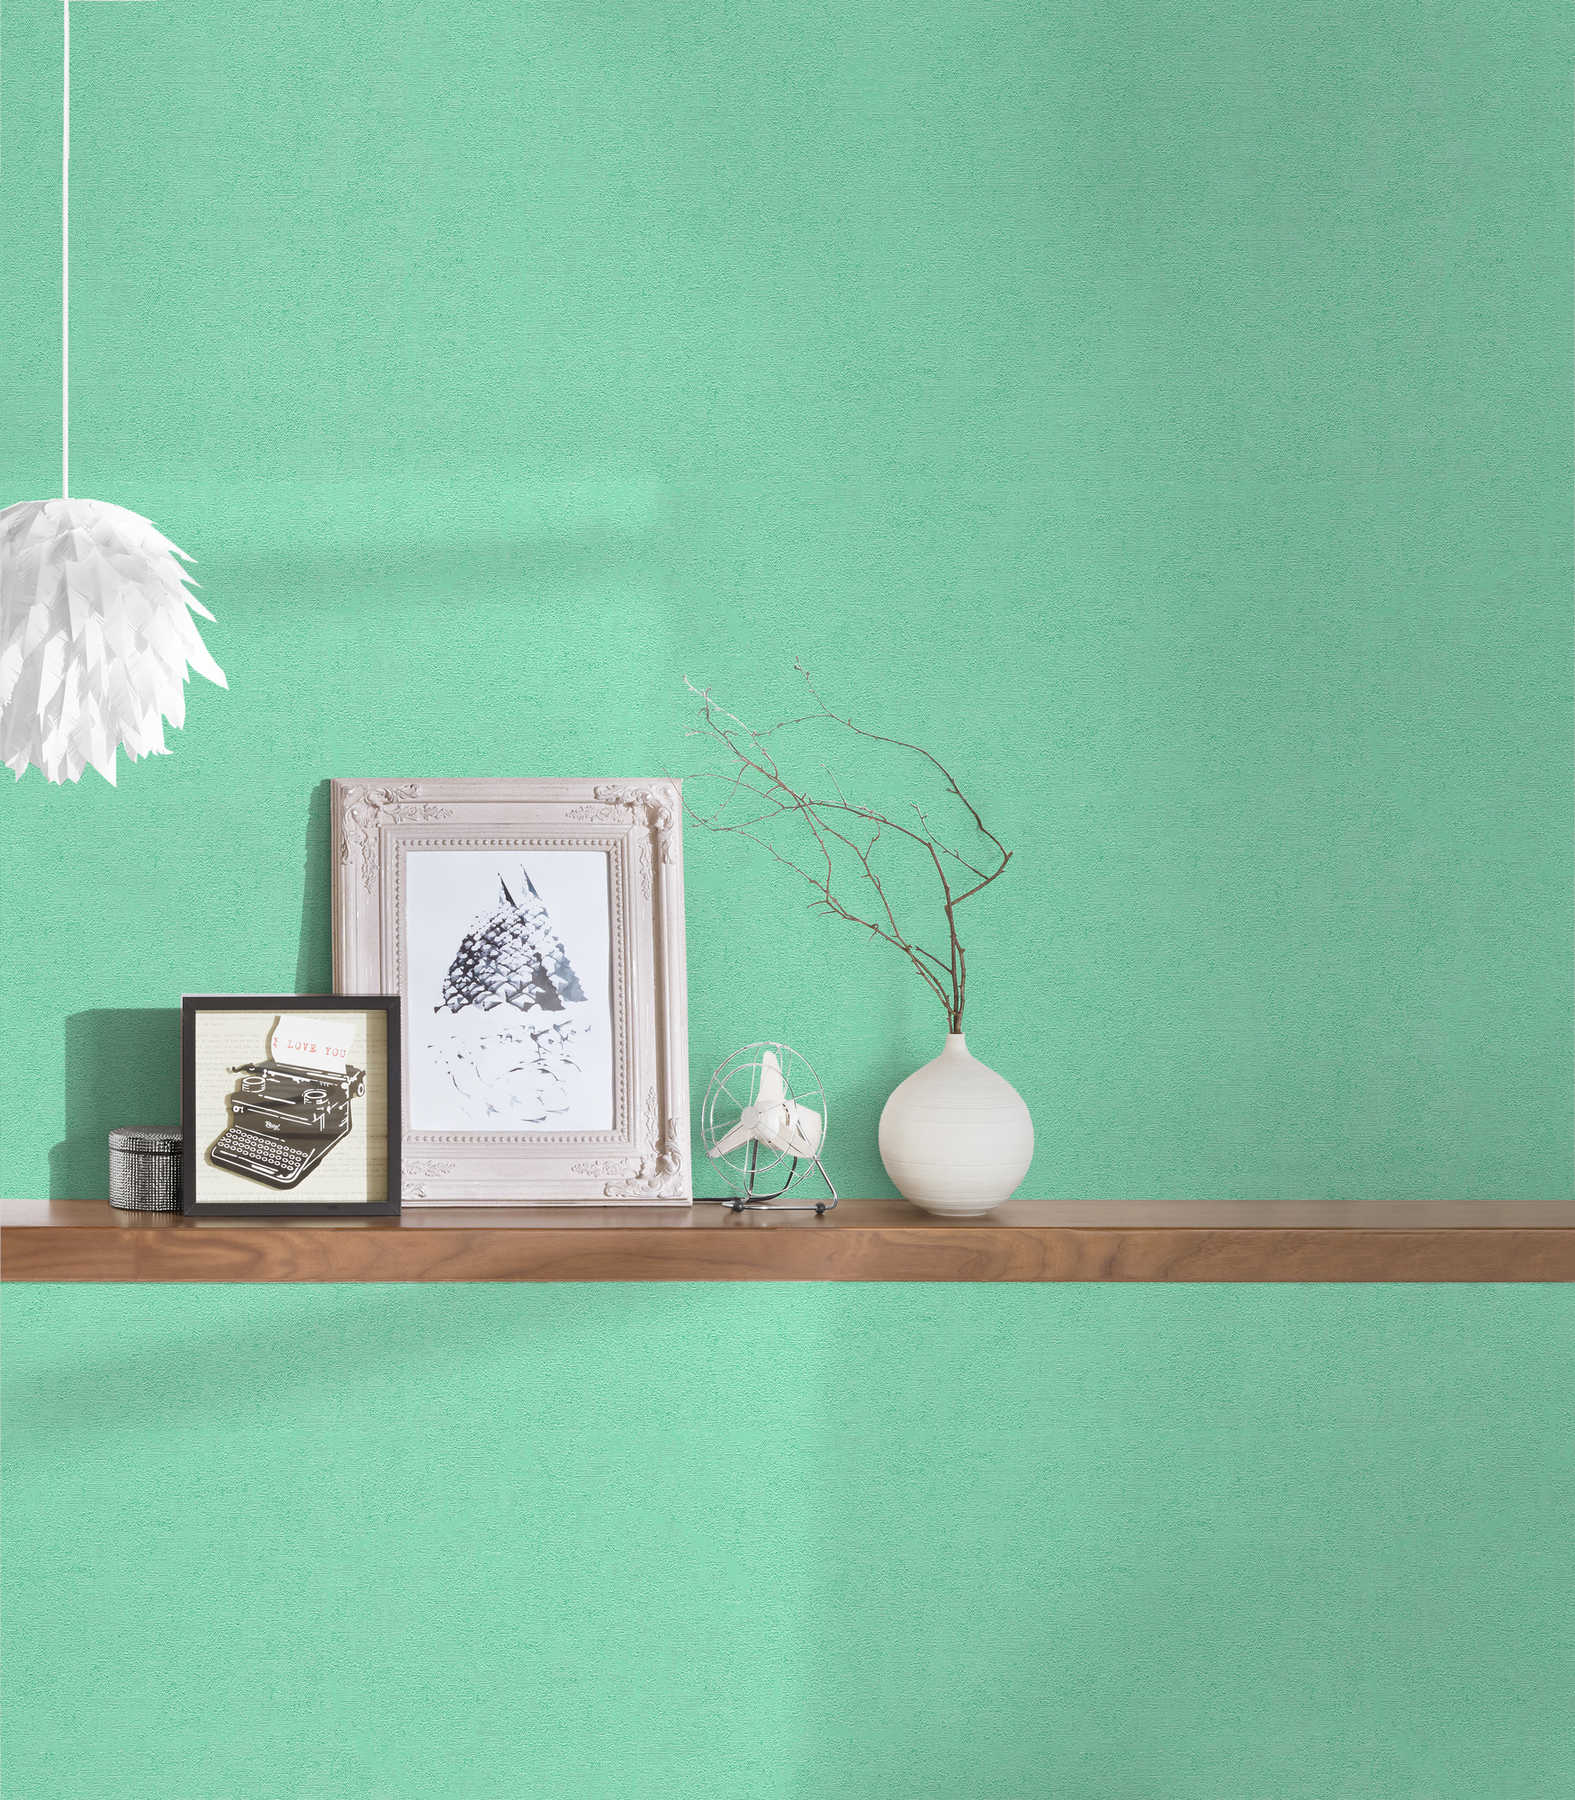             VERSACE Home Unit Behang Mint met Glanseffect - Groen
        